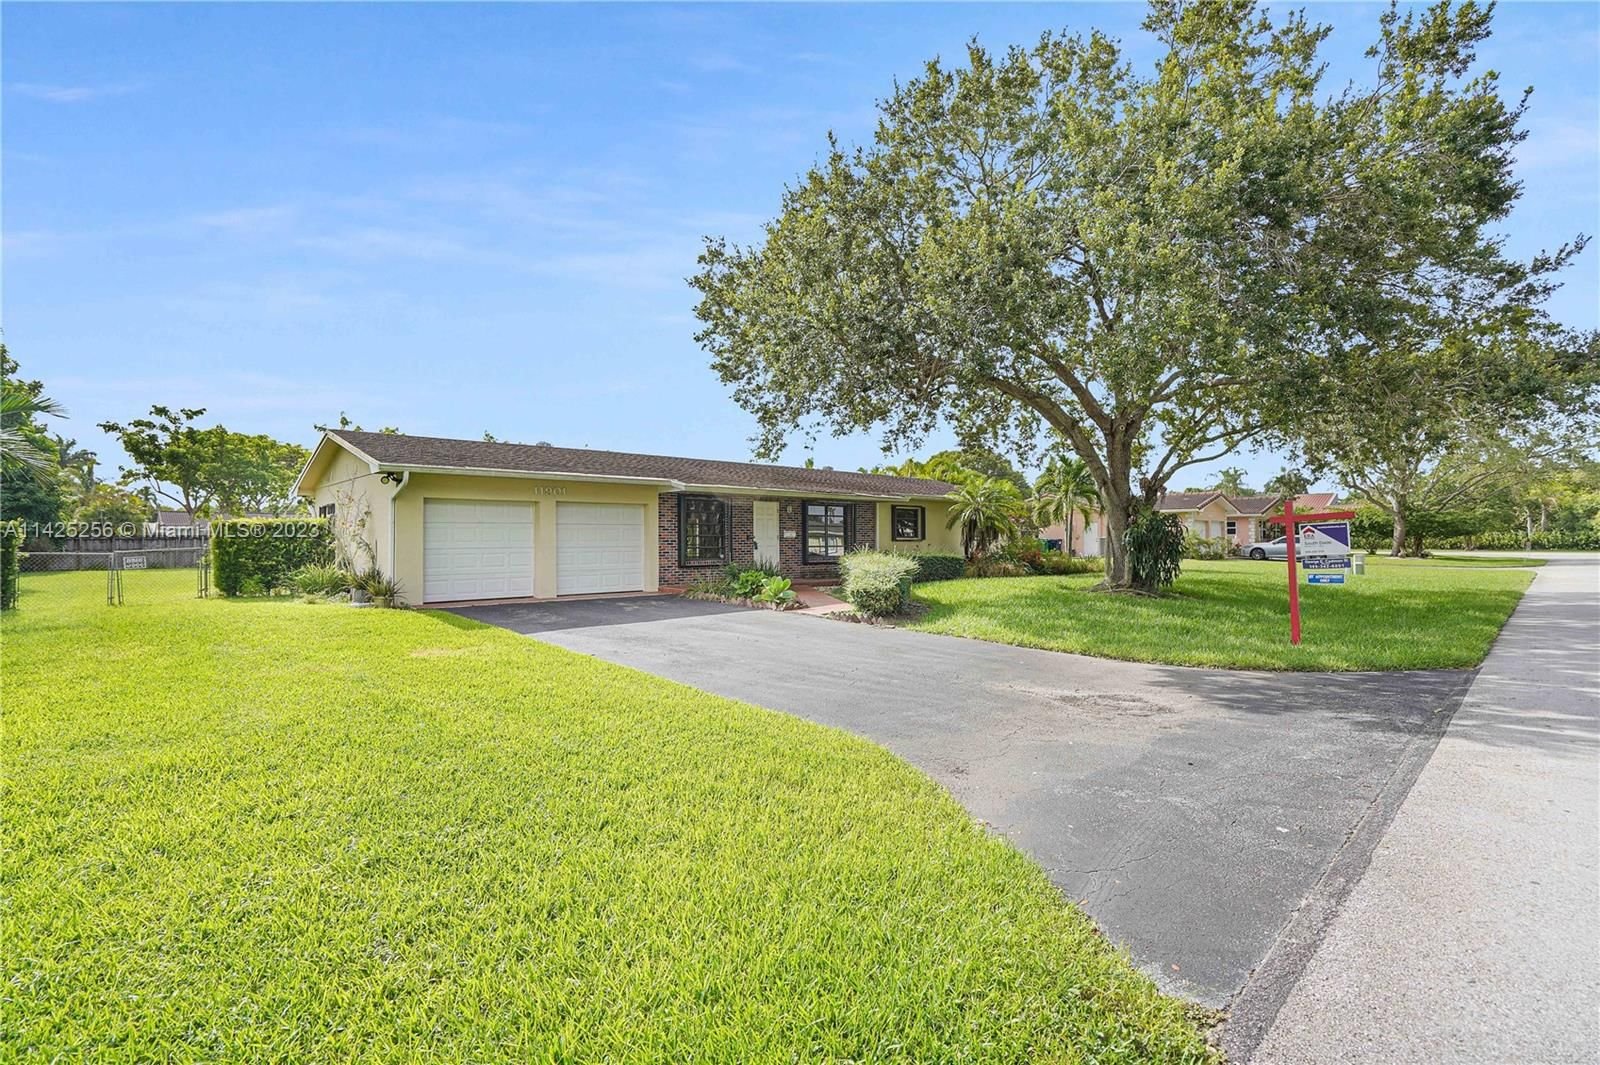 Real estate property located at 11901 100 Ave, Miami-Dade County, Miami, FL